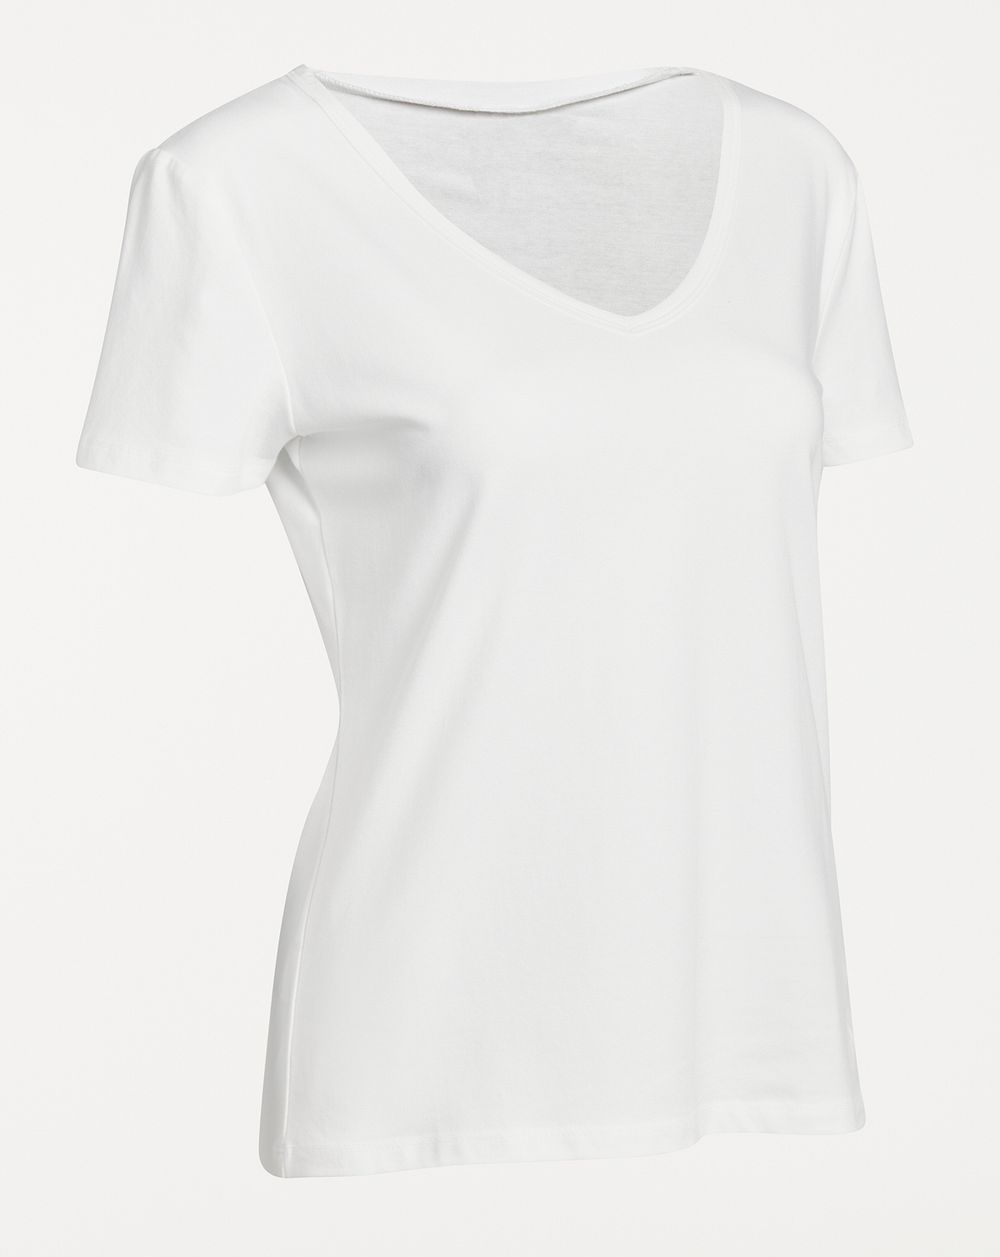 Simple white t-shirt mockup